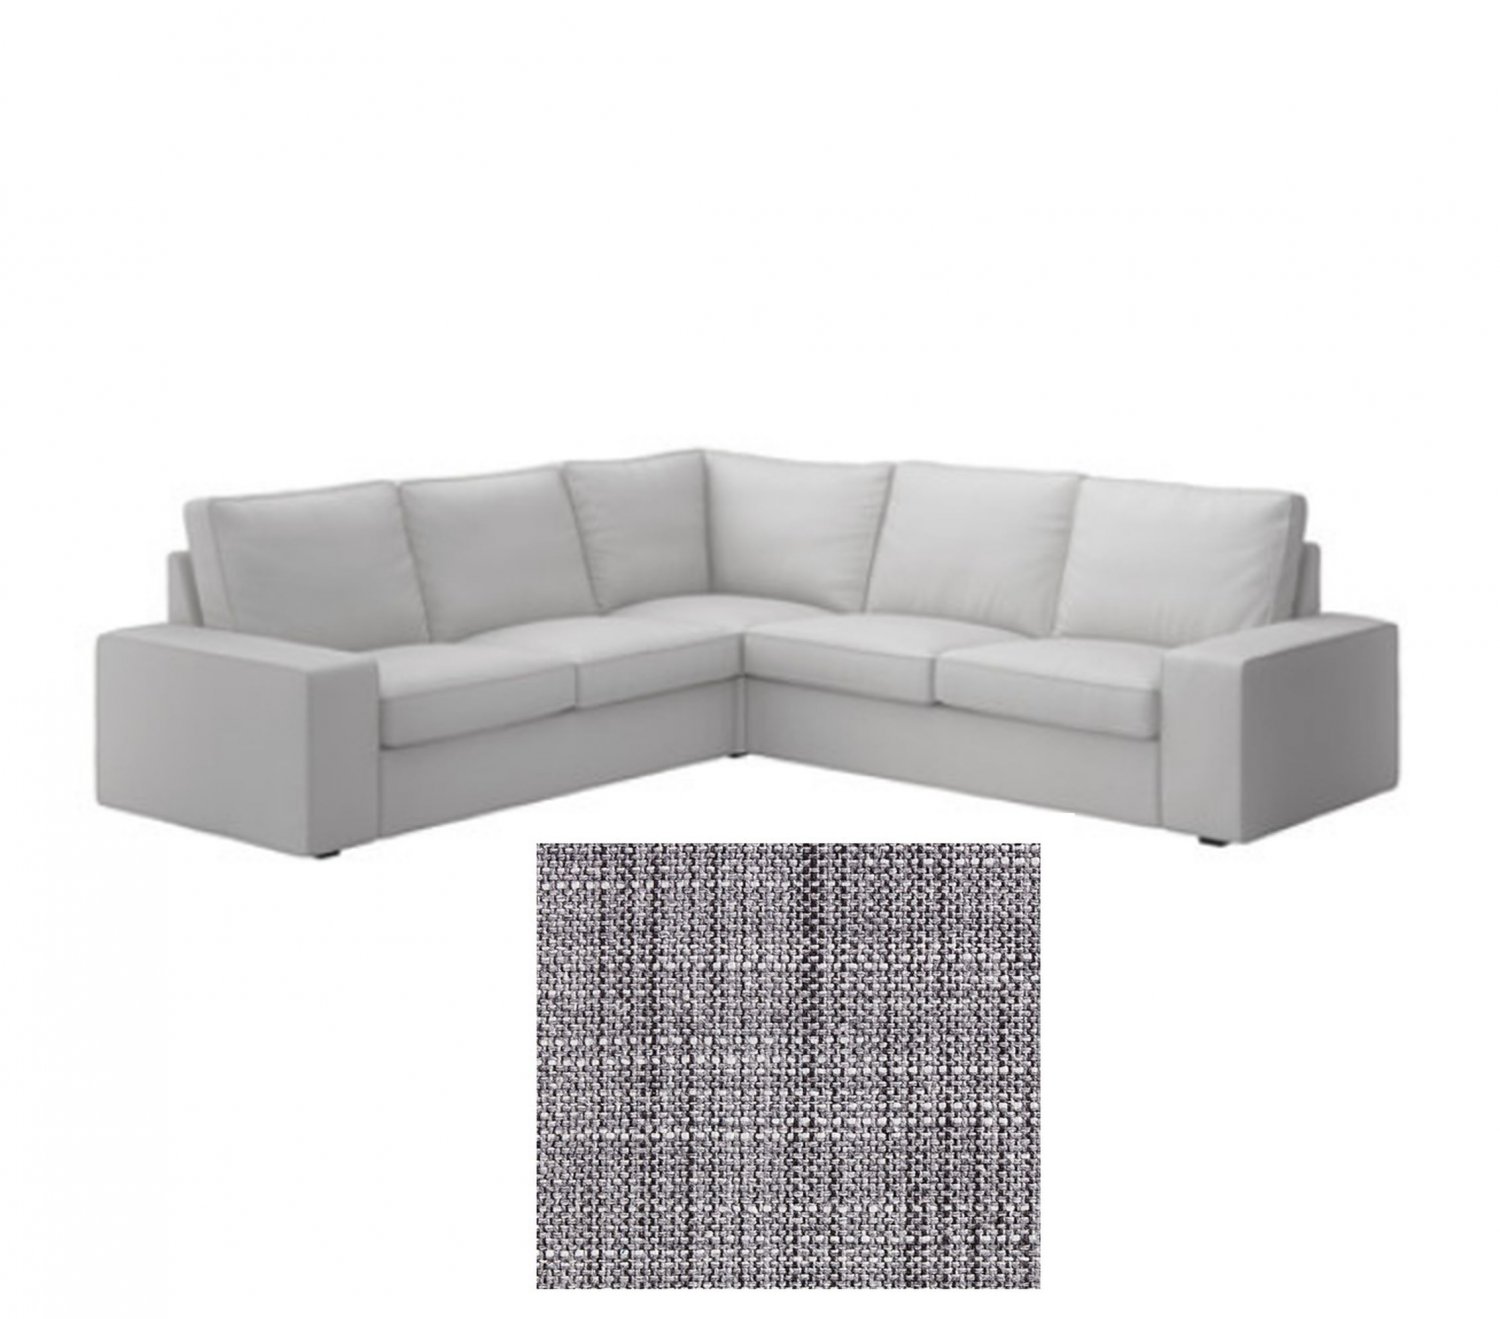 Ikea Kivik 22 Corner Sofa Slipcovers 4 Seat Sectional Covers Isunda